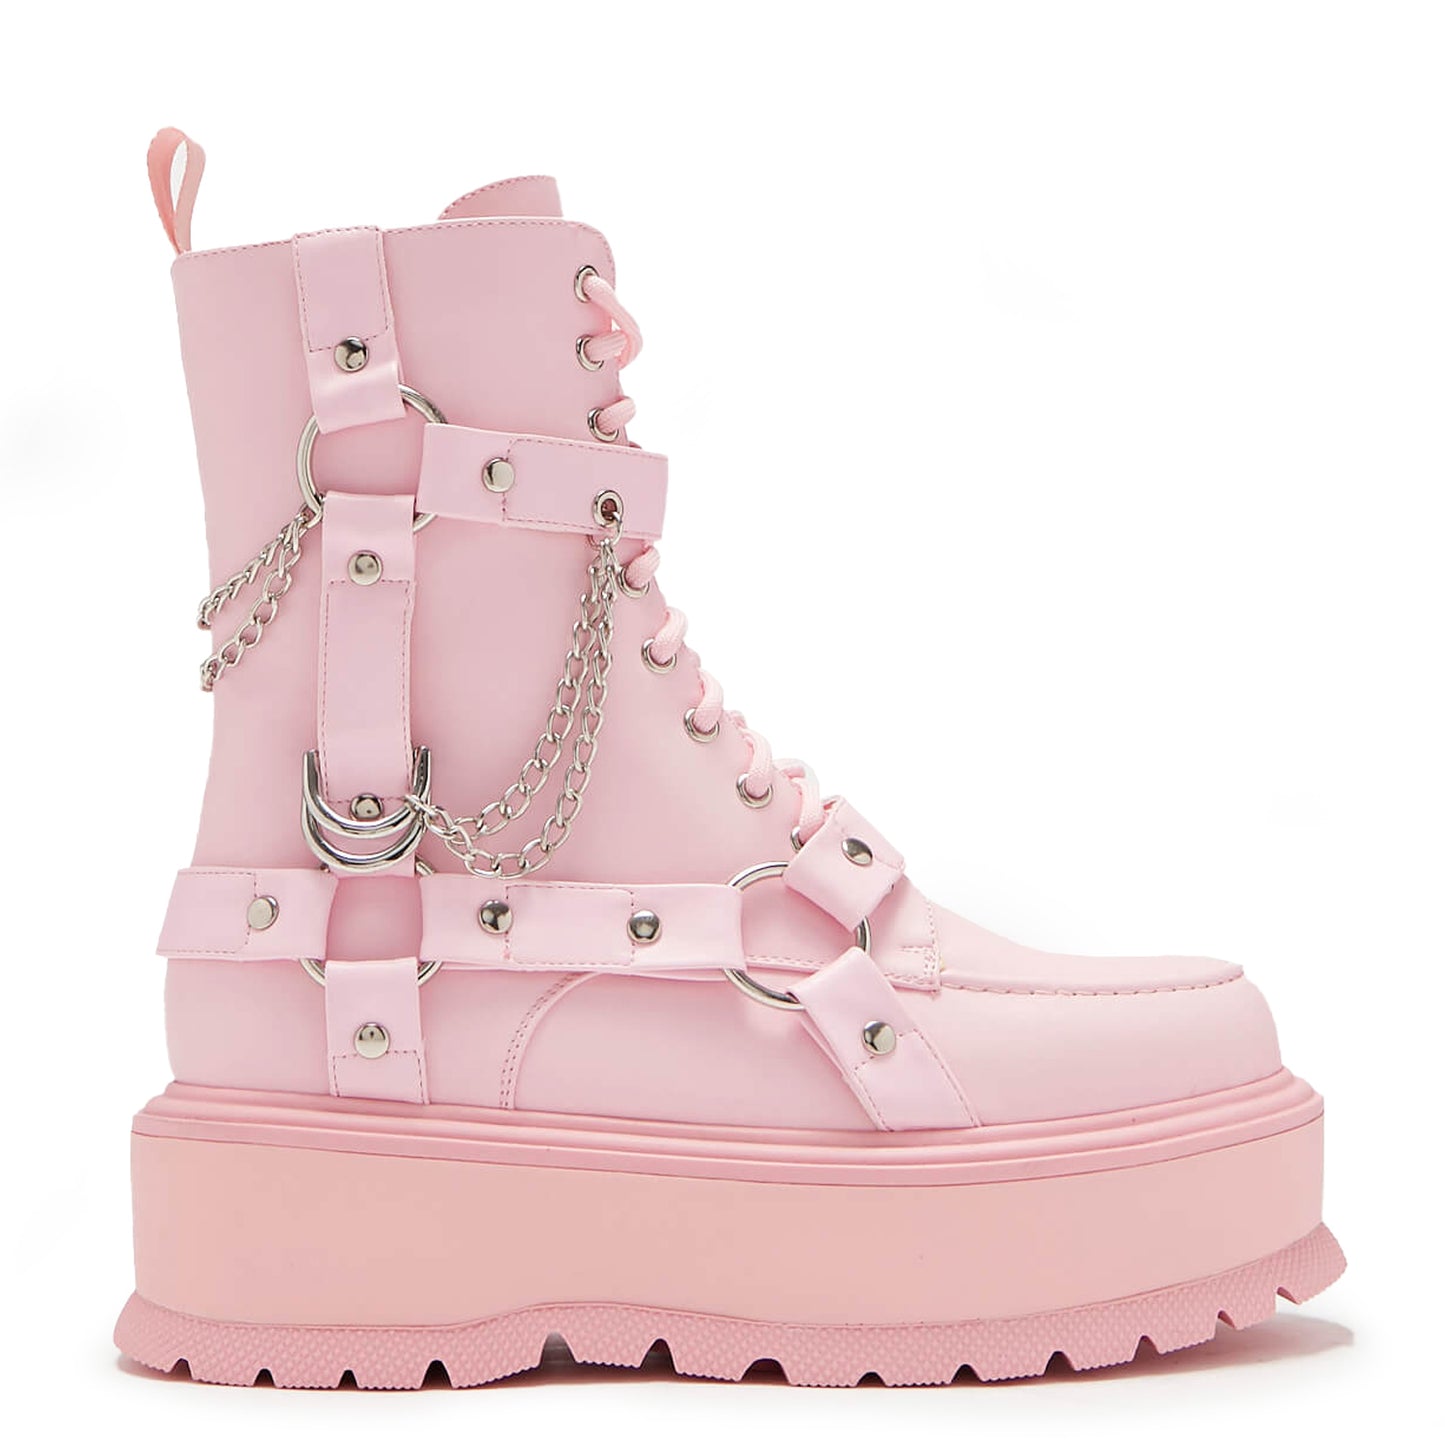 Yami Pastel Pink Platform Boots - Ankle Boots - KOI Footwear - Pink - Main View